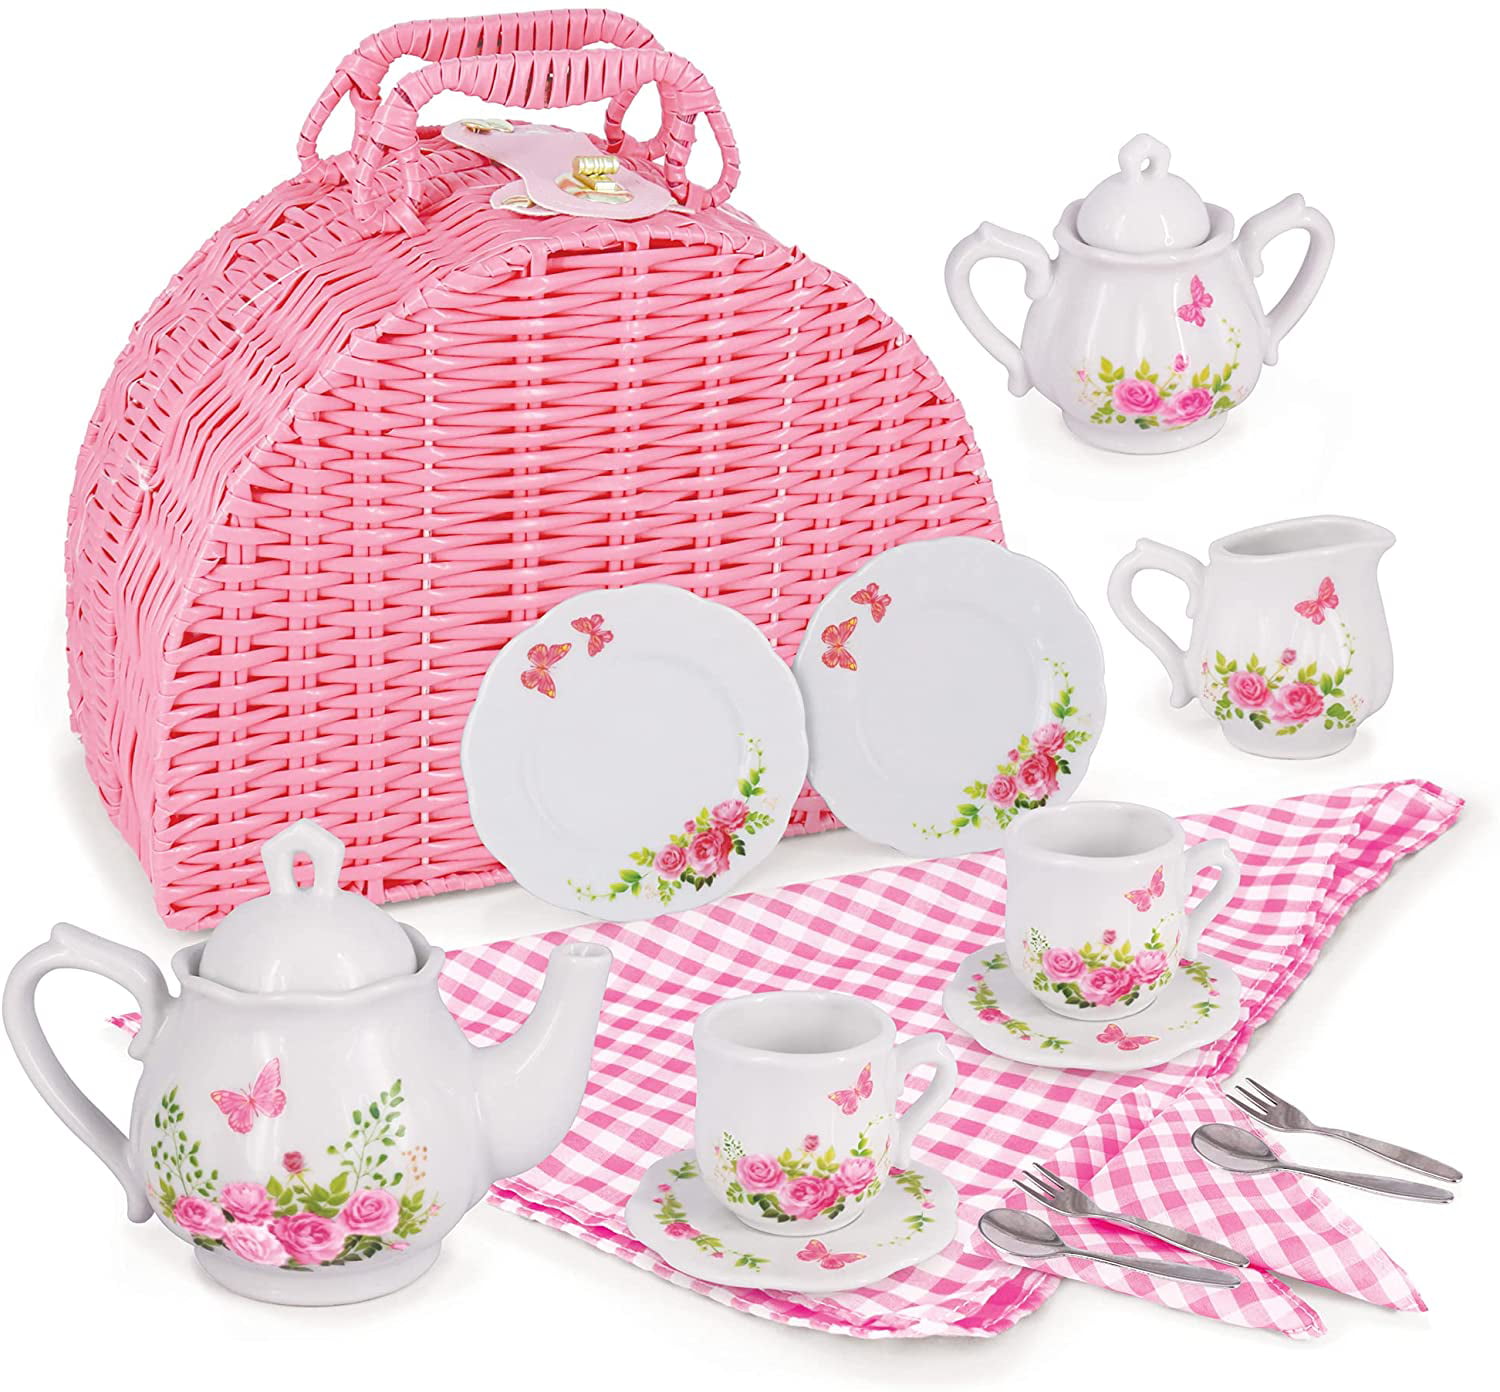 My Darling Floral Hot Pink 10 x 8 Tin Metal Toy 14 Piece Tea Set in Basket 